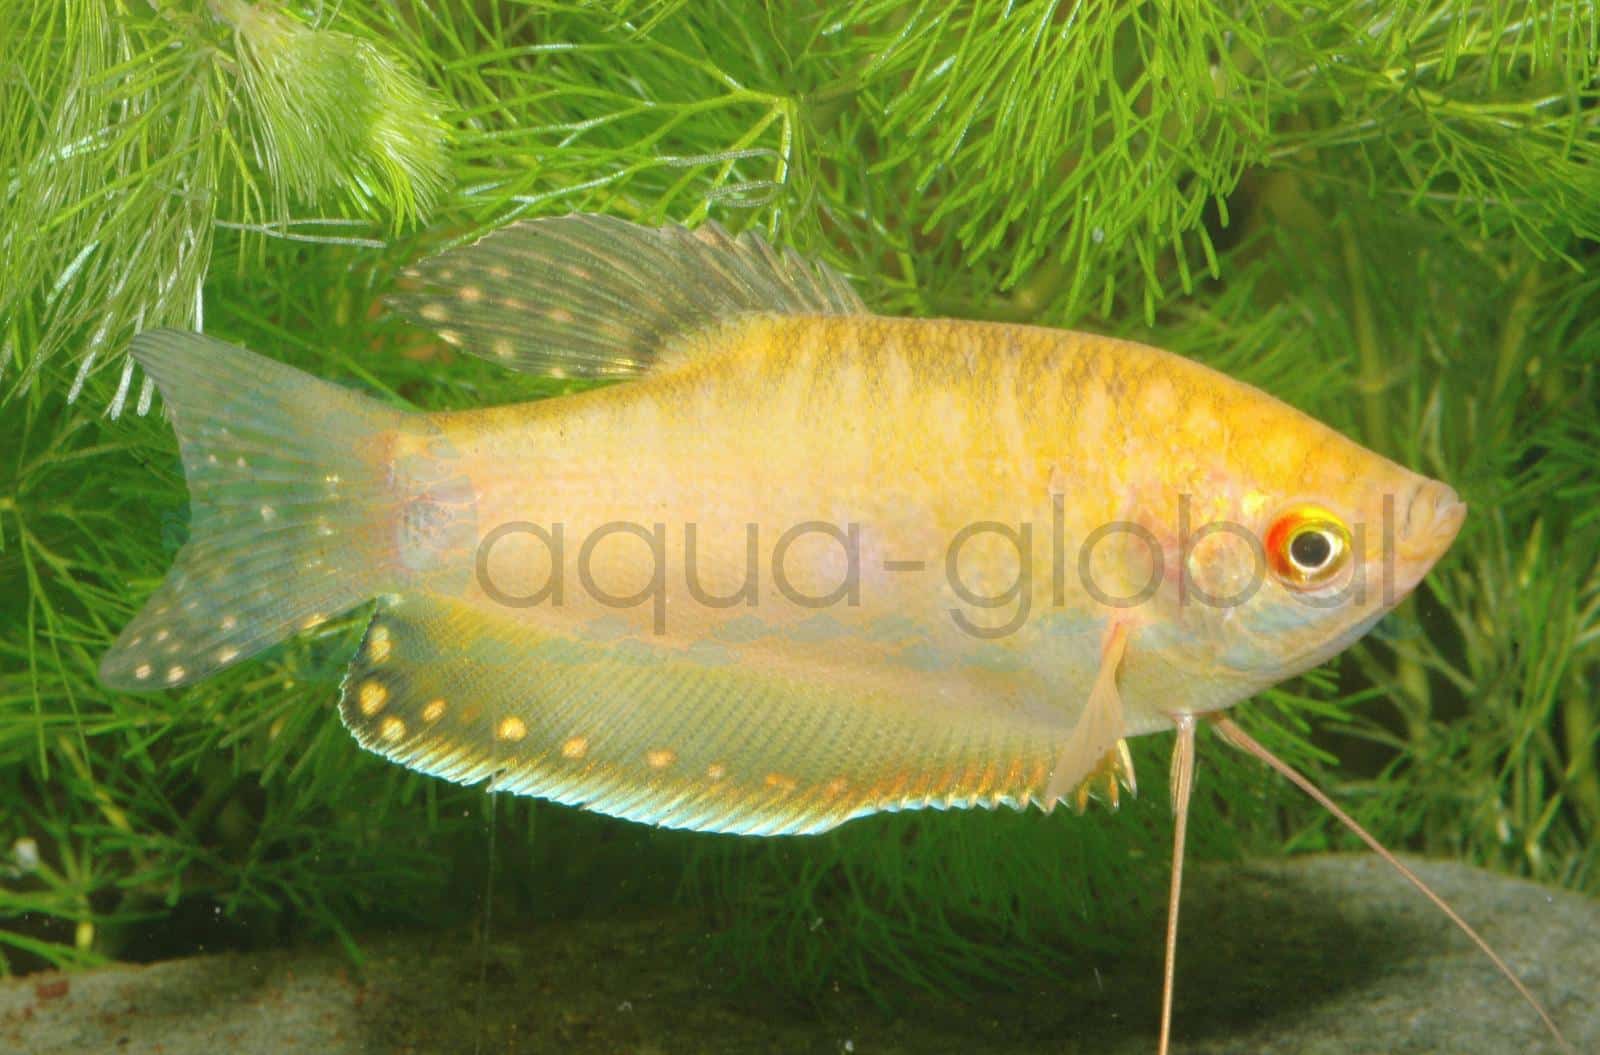 Goldfadenfisch (Trichopodus trichopterus "Gold")